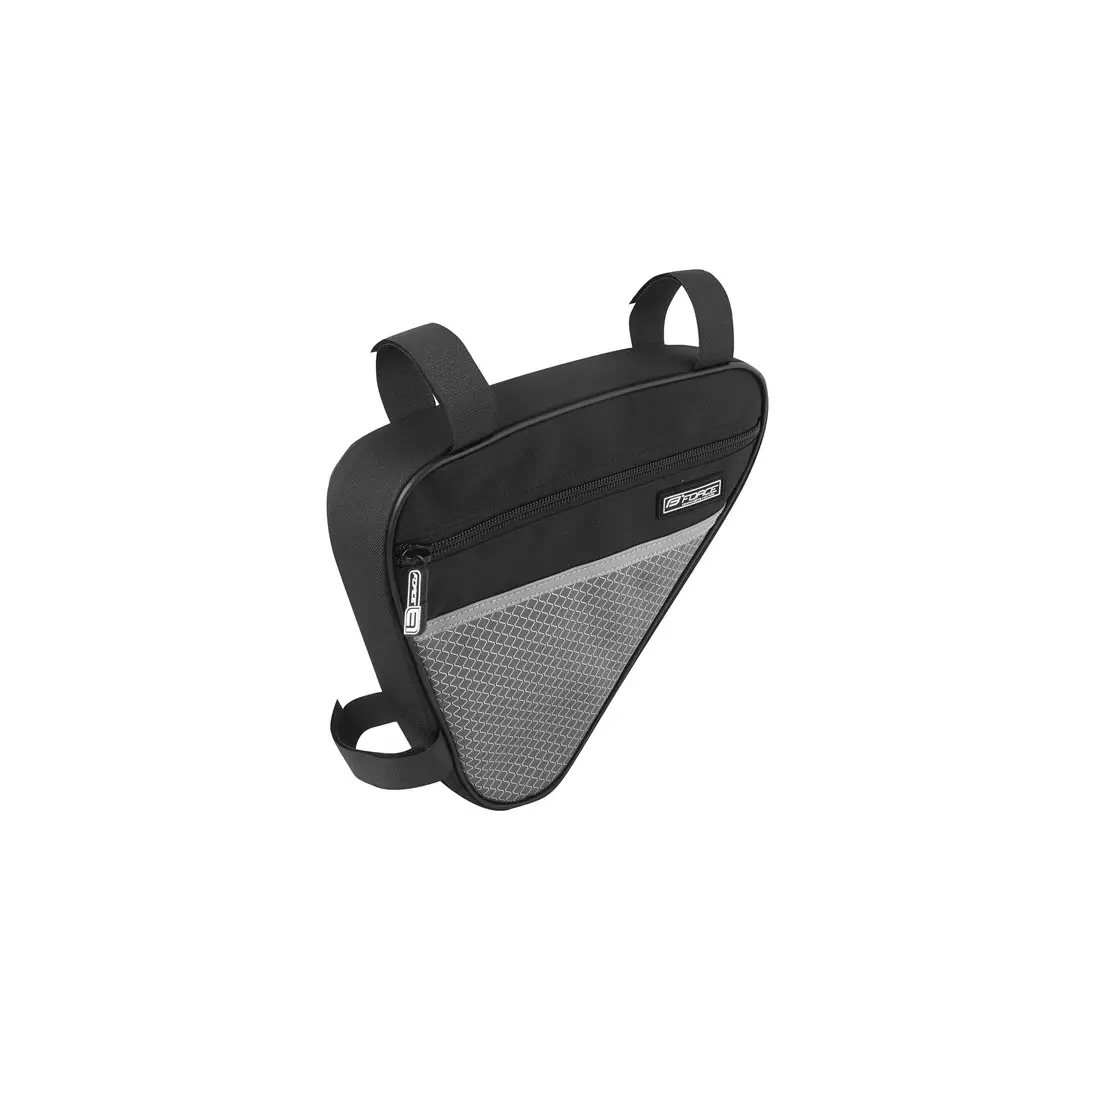 FORCE CLASSIC STRONG handbag black-gray 896016